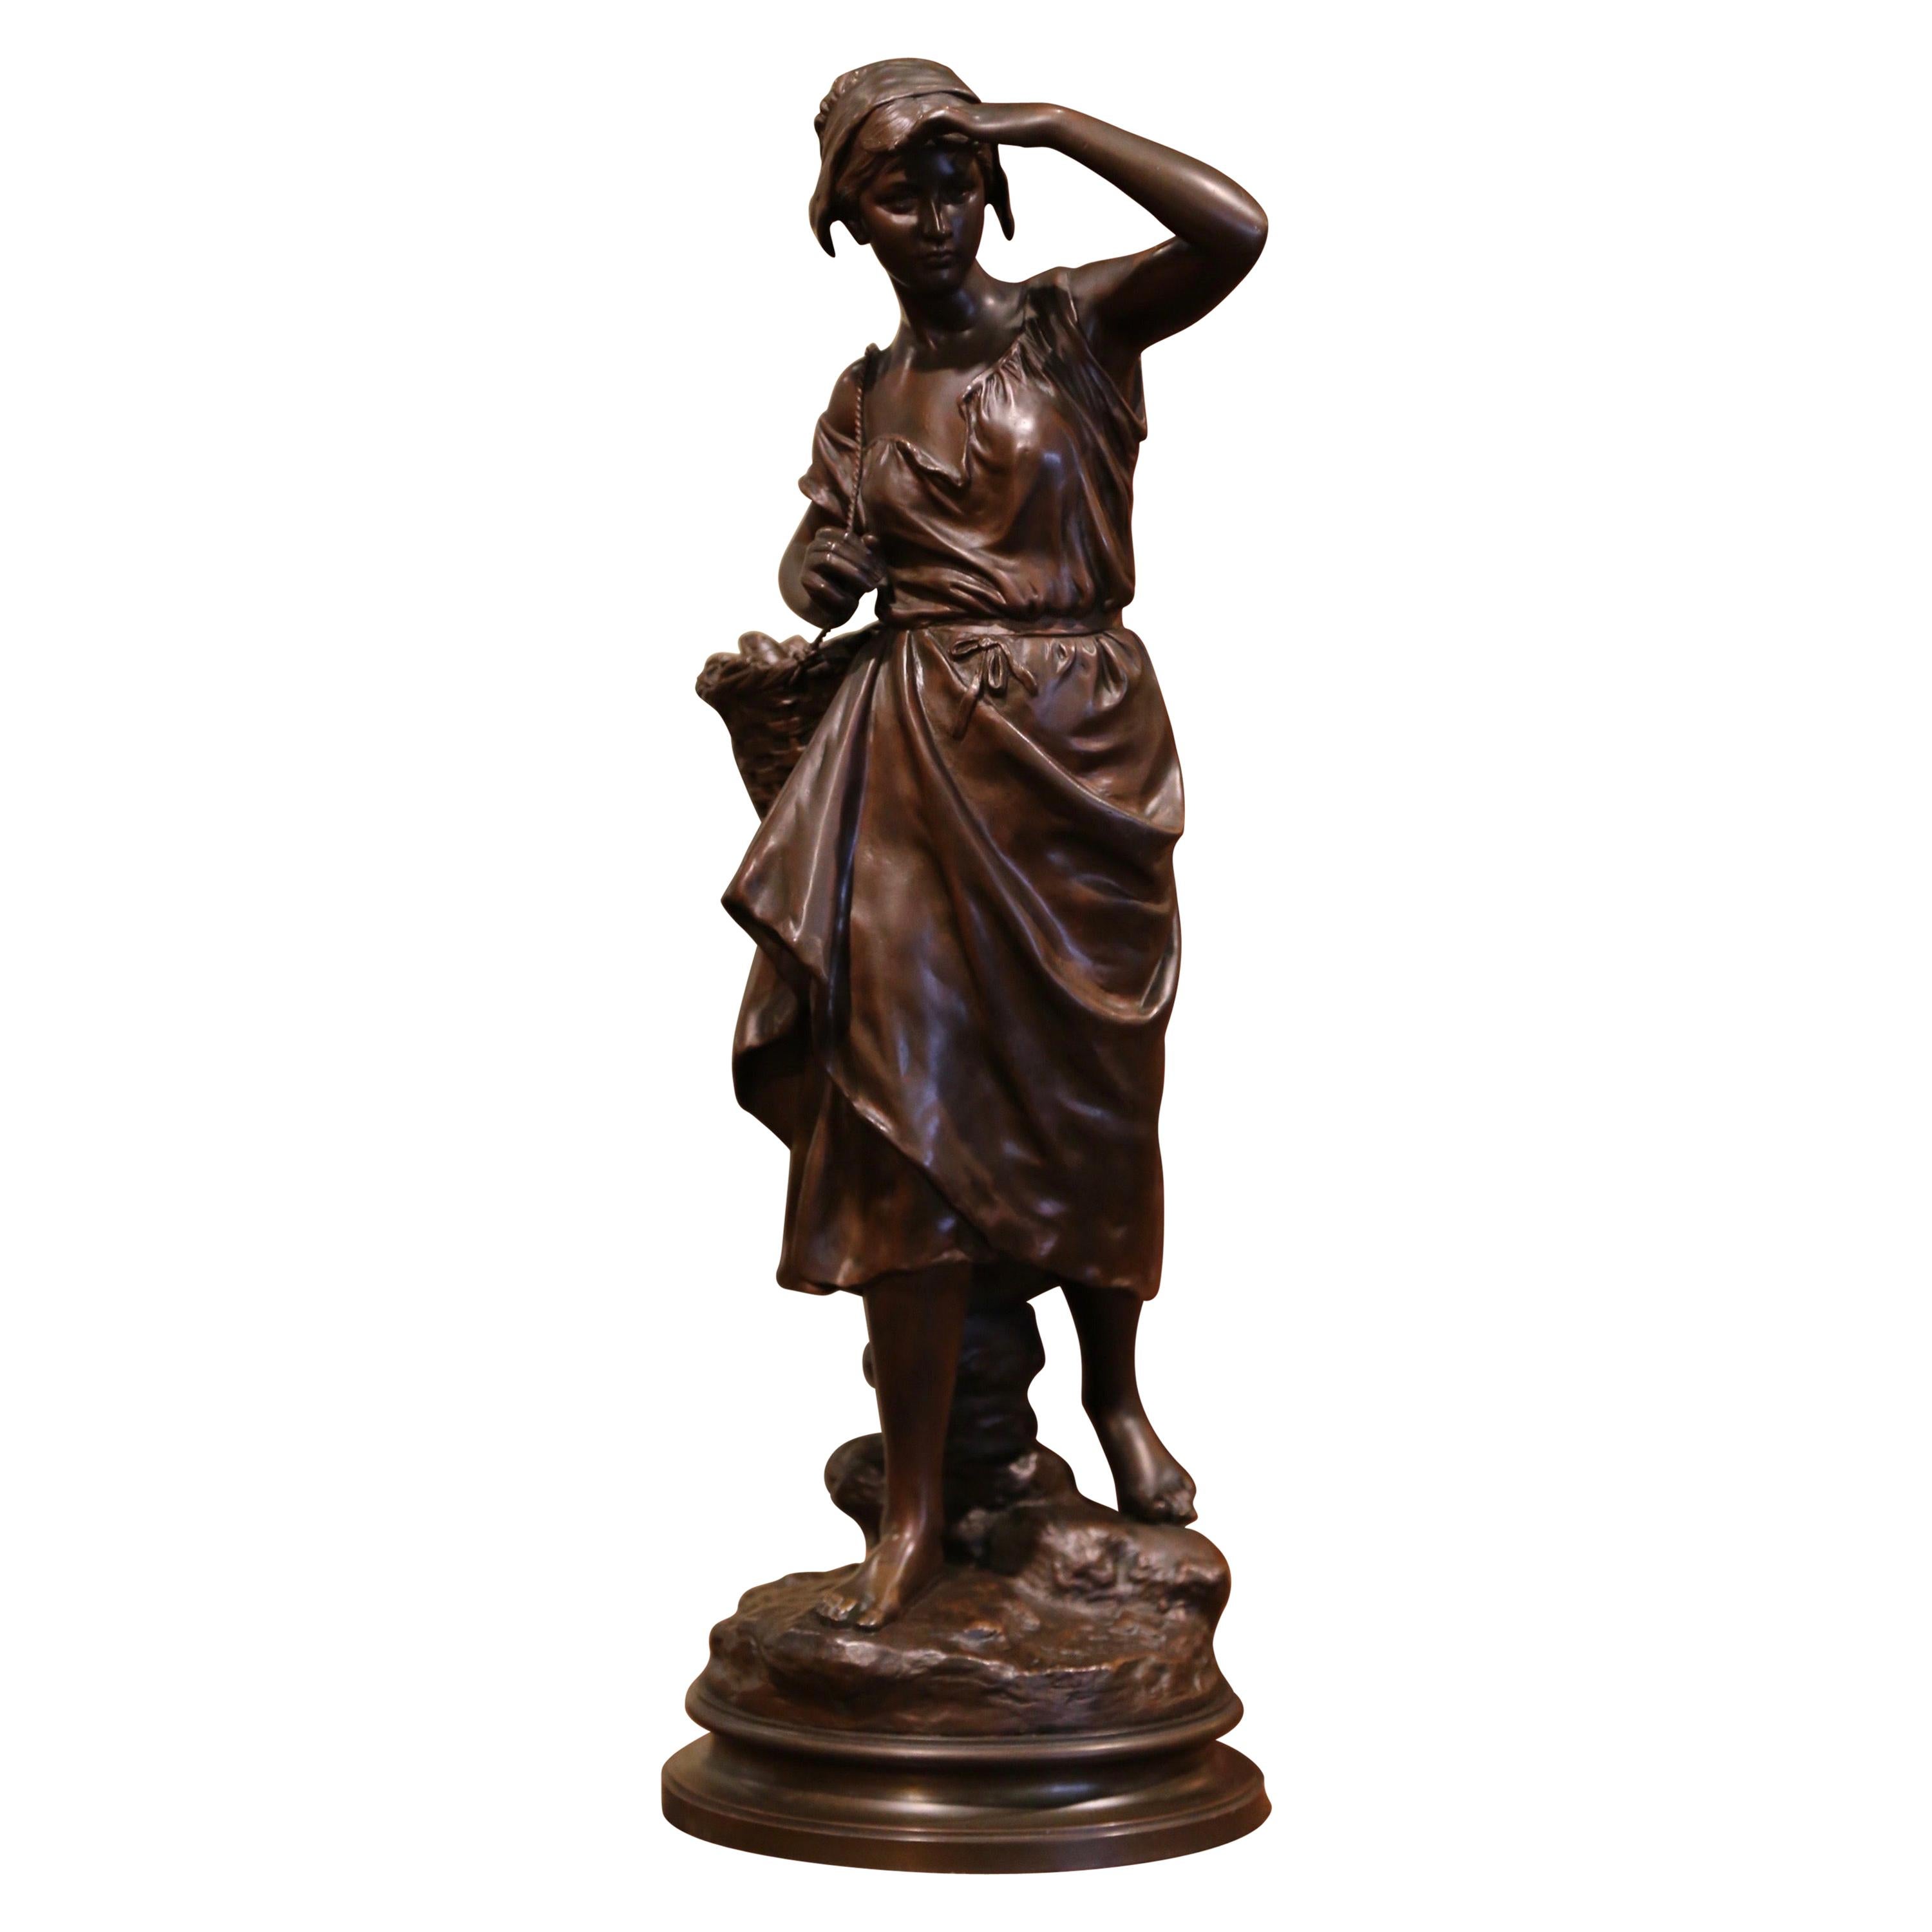 19th Century French Patinated Bronze Sculpture "La Pecheuse" Signed E. Laurent